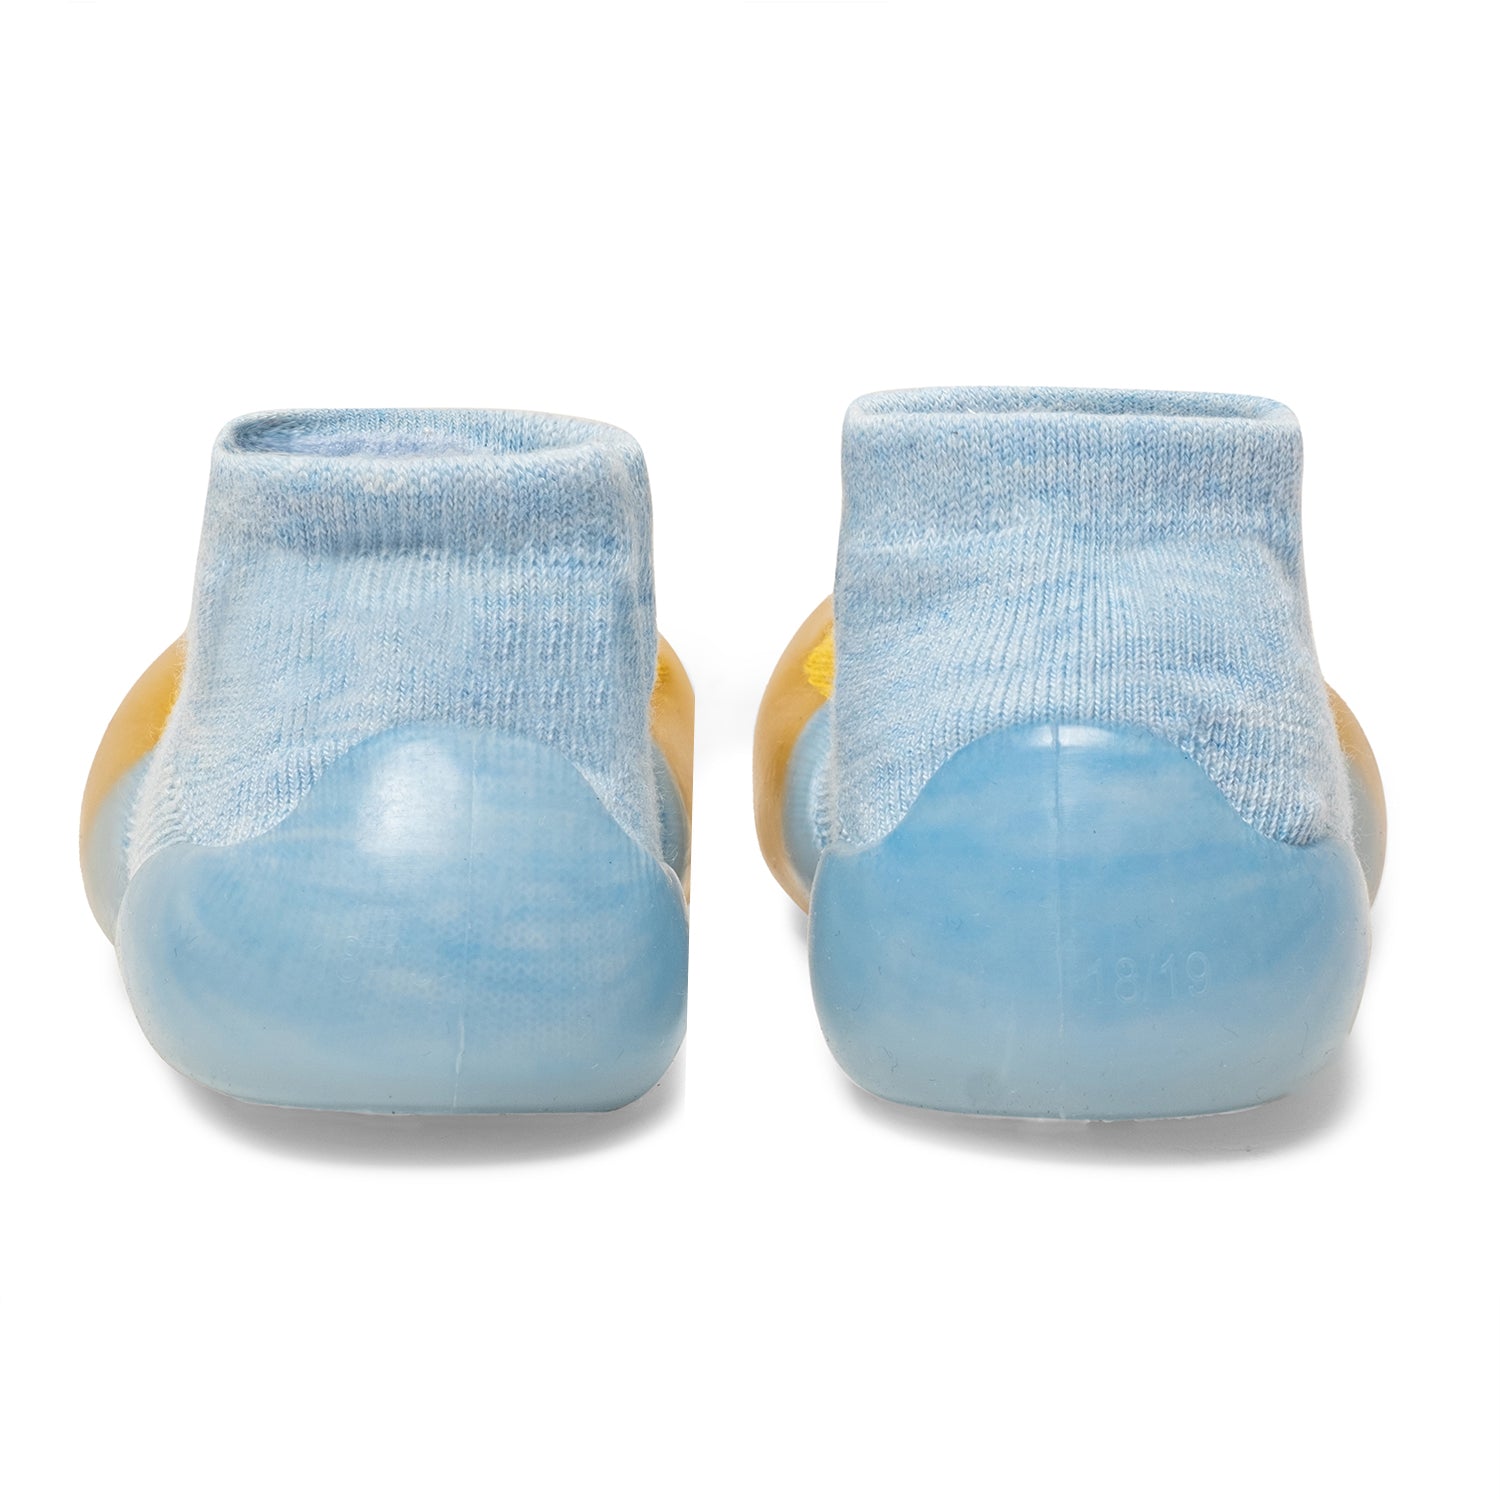 Baby Moo Cute Eye Anti-Skid Rubber Sole Comfy Slip-On Sock Shoes - Blue, Mustard